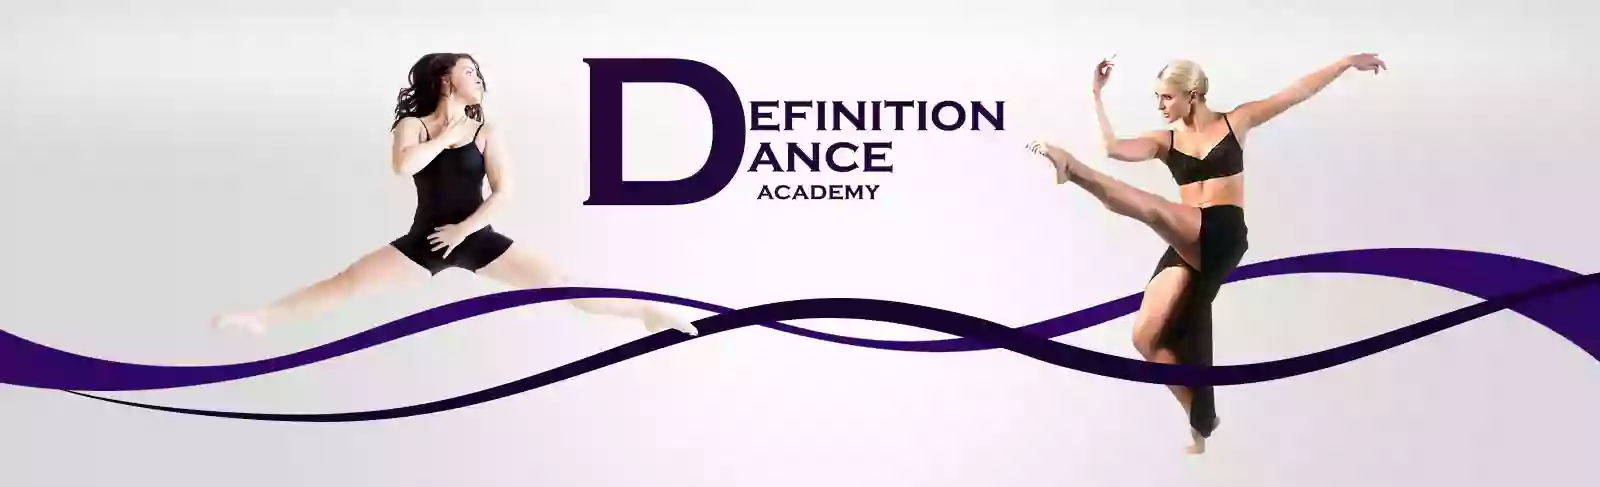 Definition Dance Academy